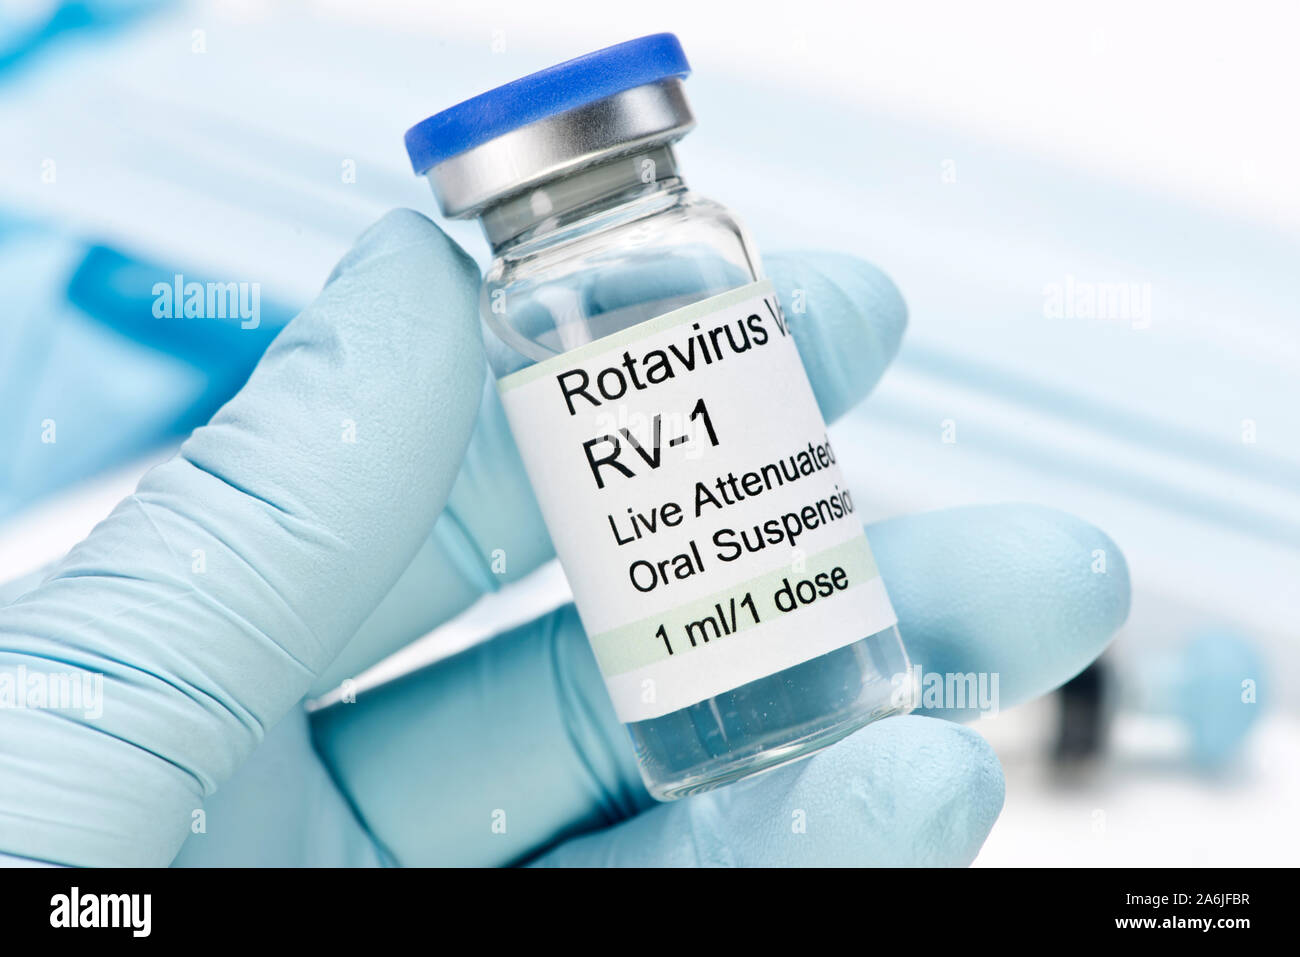 Rotavirus RV-1 Oral Vaccine Vial Stock Photo